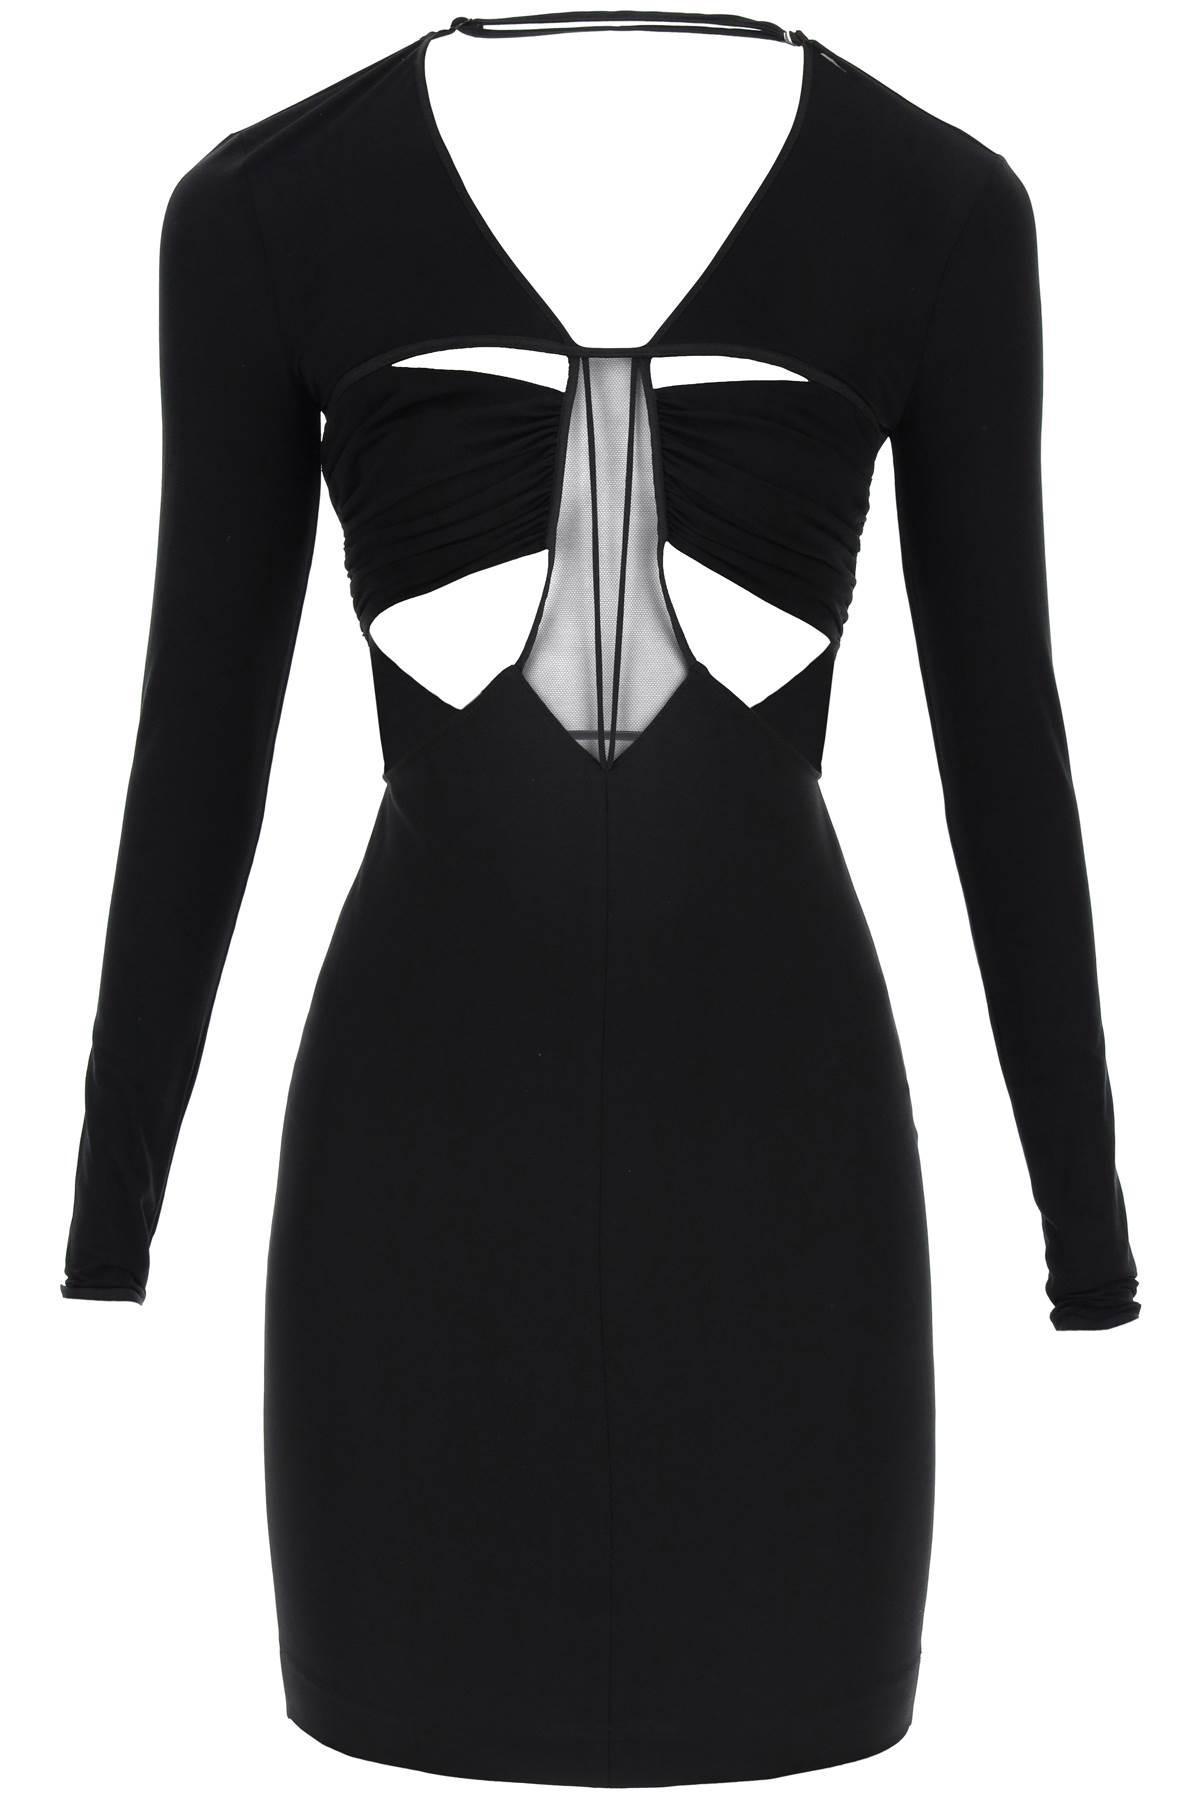 Nensi Dojaka Long Sleeve Mini Dress With Cut-out in Black | Lyst